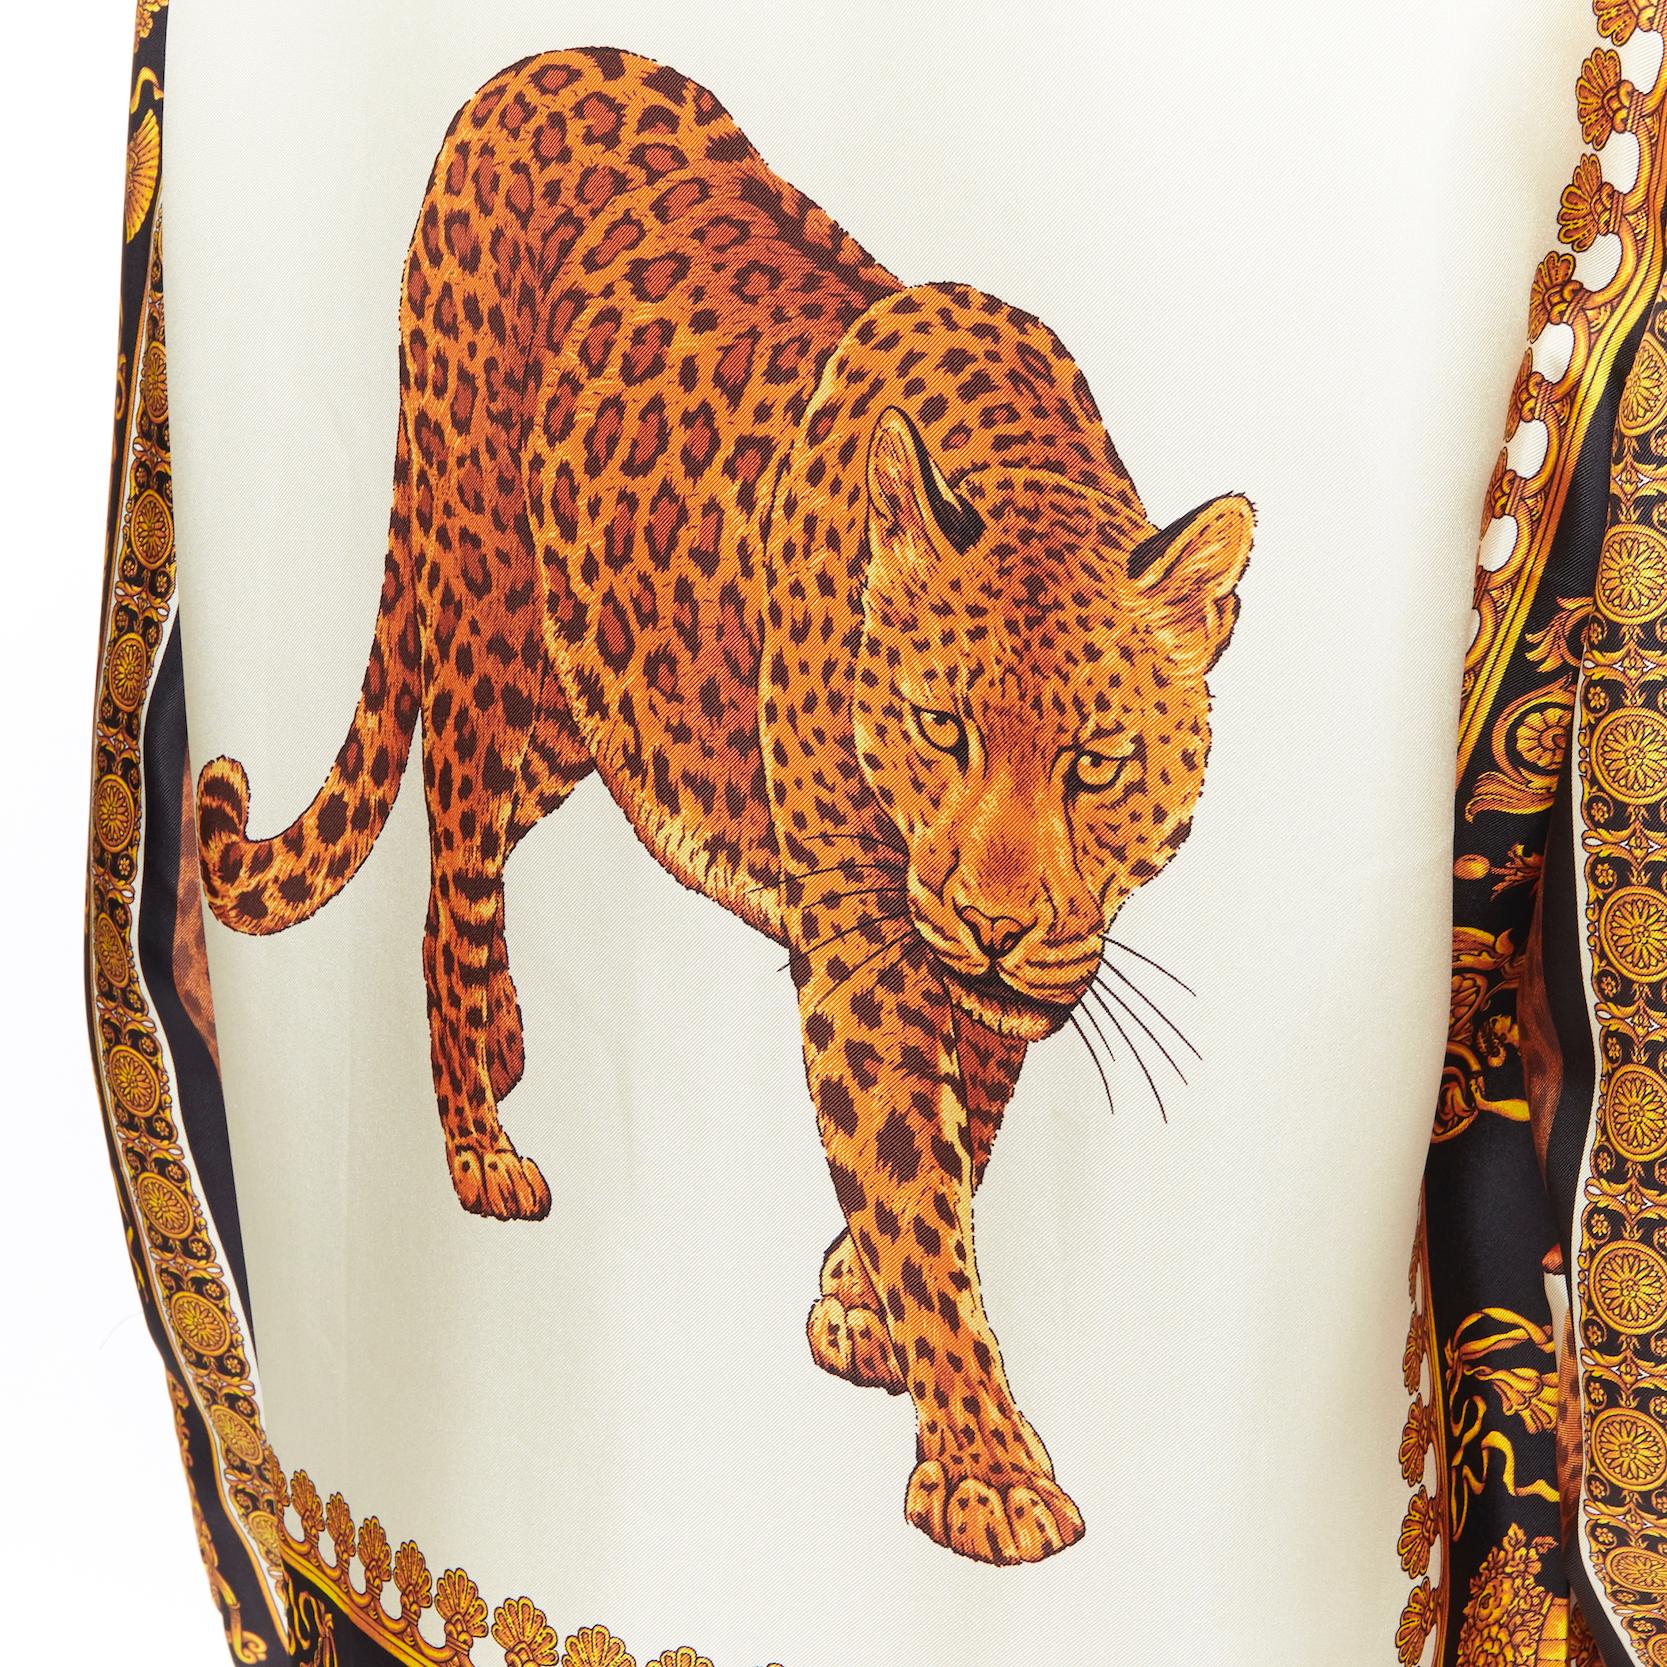 new VERSACE AW18 Runway Wild Leopard gold baroque print 100% silk shirt EU38 S
Brand: Versace
Designer: Donatella Versace
Collection: Fall Winter 2018
As seen on: DJ Khaled, Ranveer Singh
Model Name / Style: Silk shirt
Material: Silk
Color: